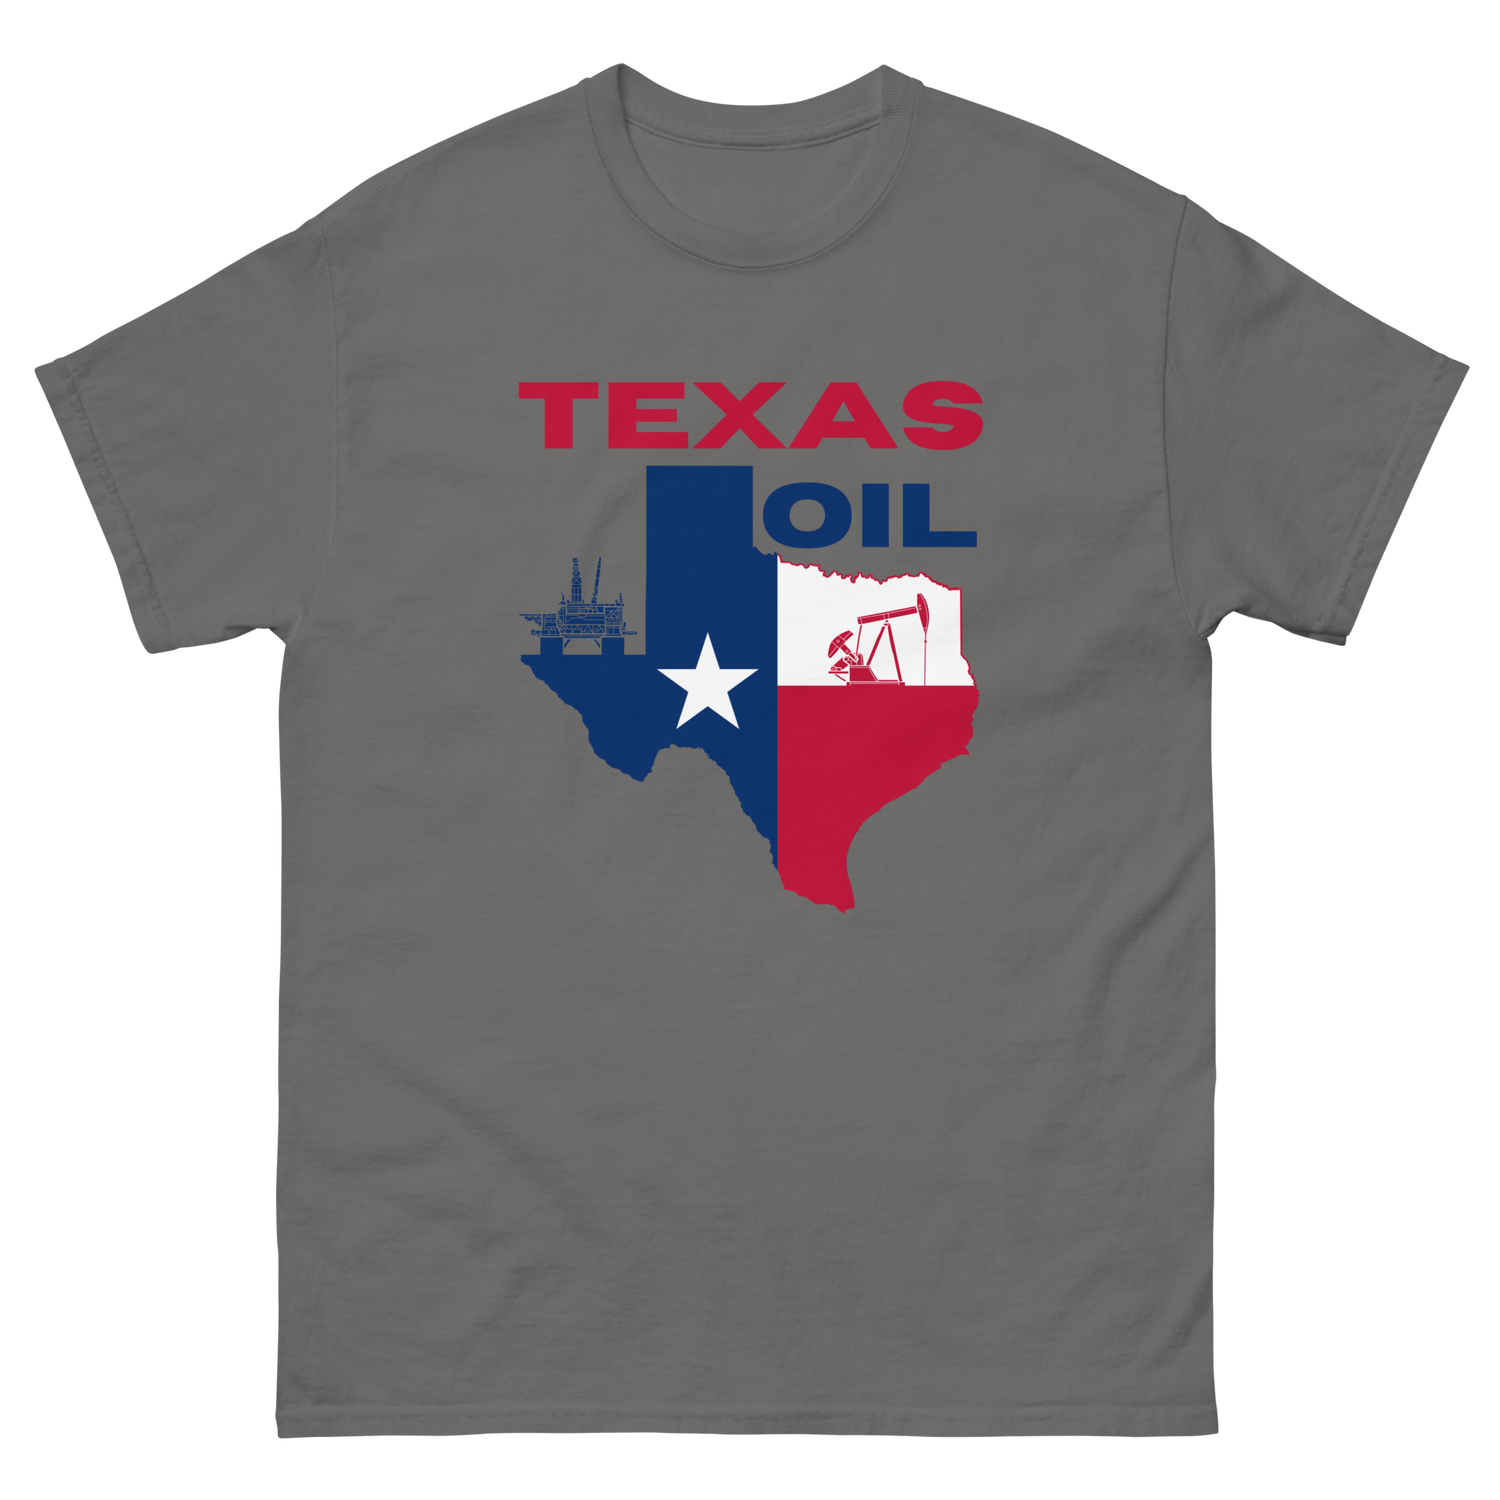 Texas Oil - Men's classic tee